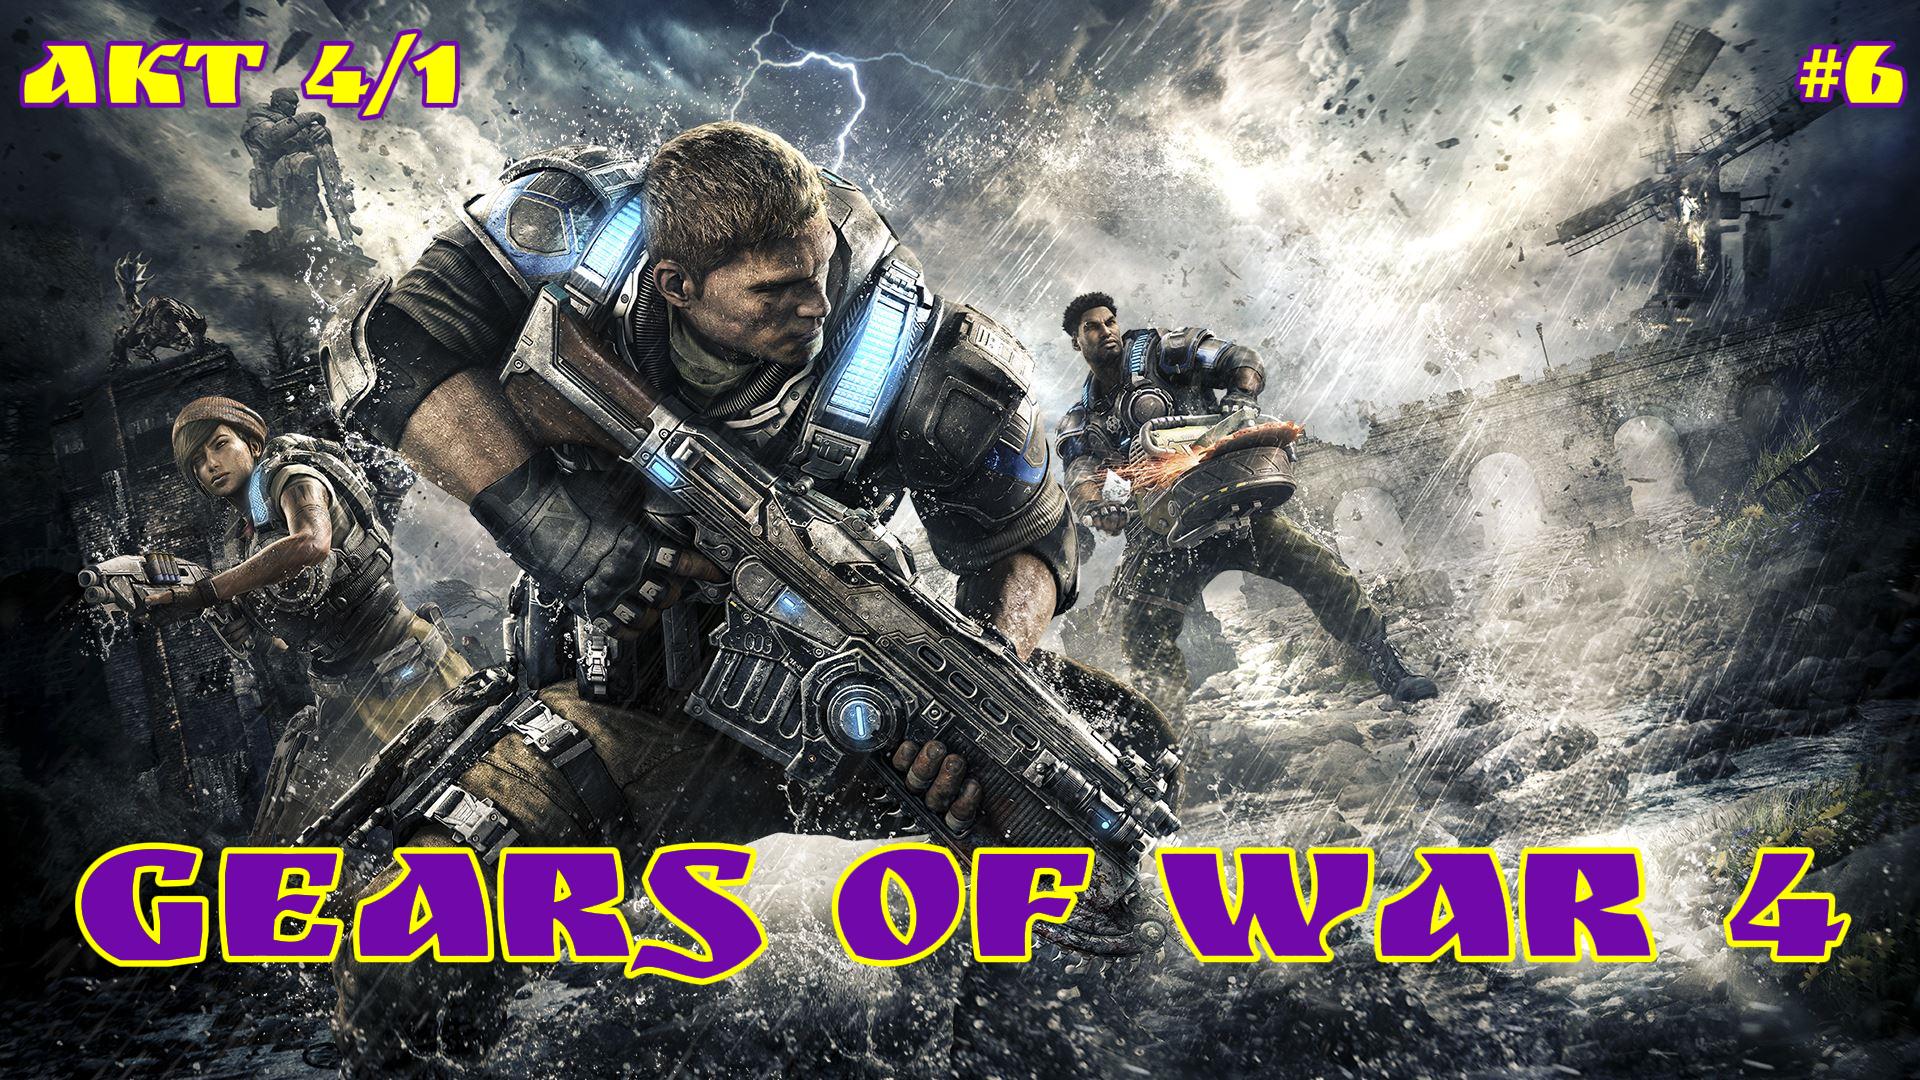 Gears of War 4 / #6 / XBOX SERIES S